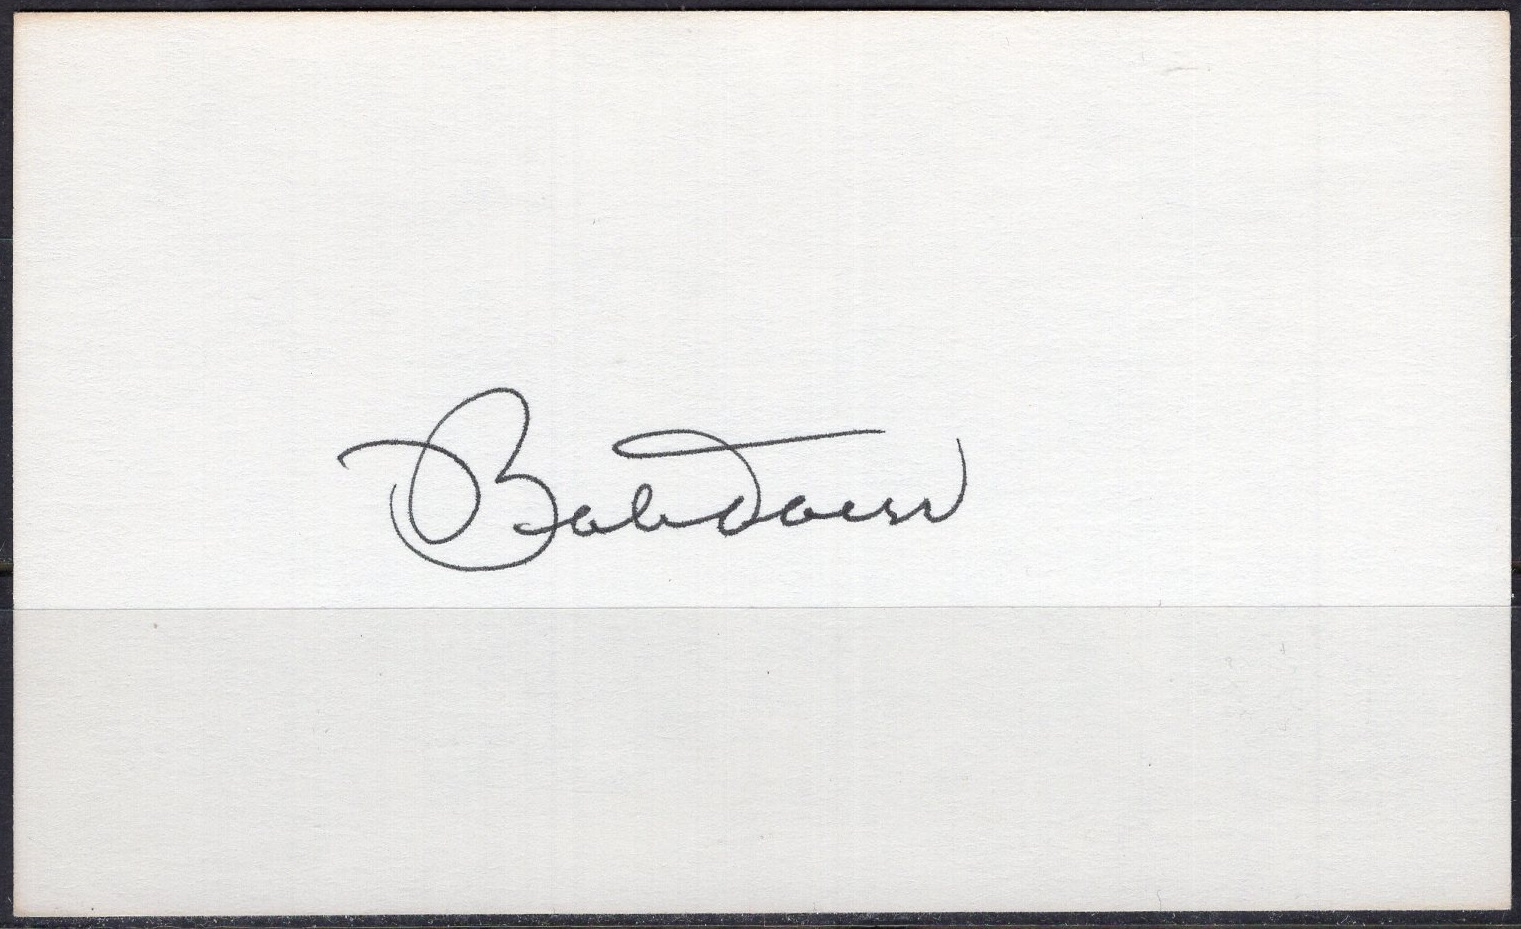 Bobby Doerr autograph